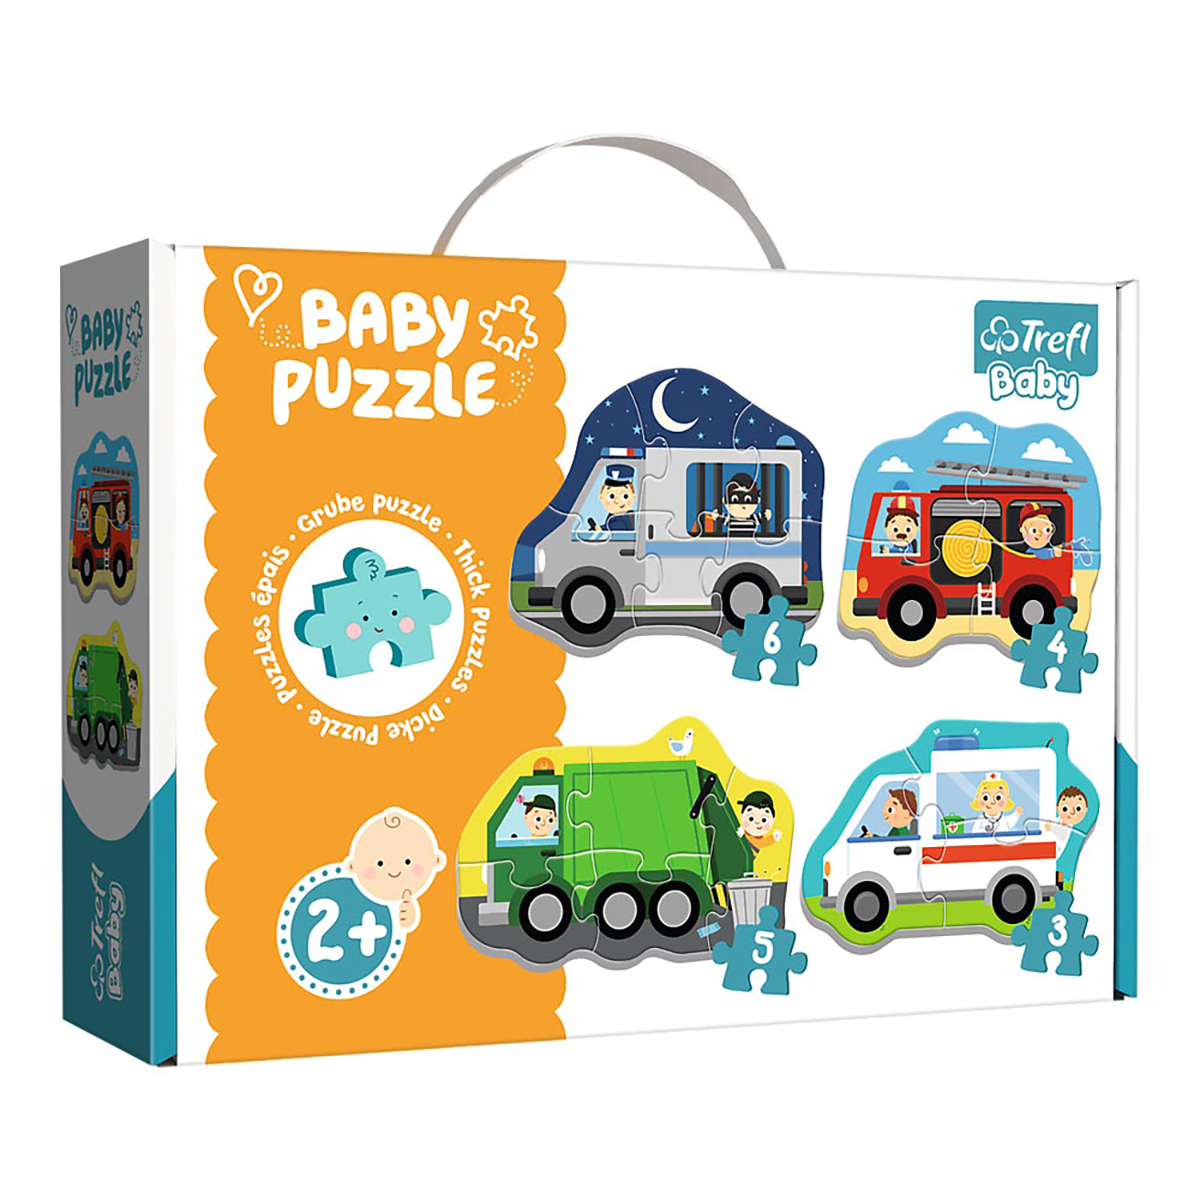 Fahrzeuge Puzzle und TREFL Puzzle Beruf Baby